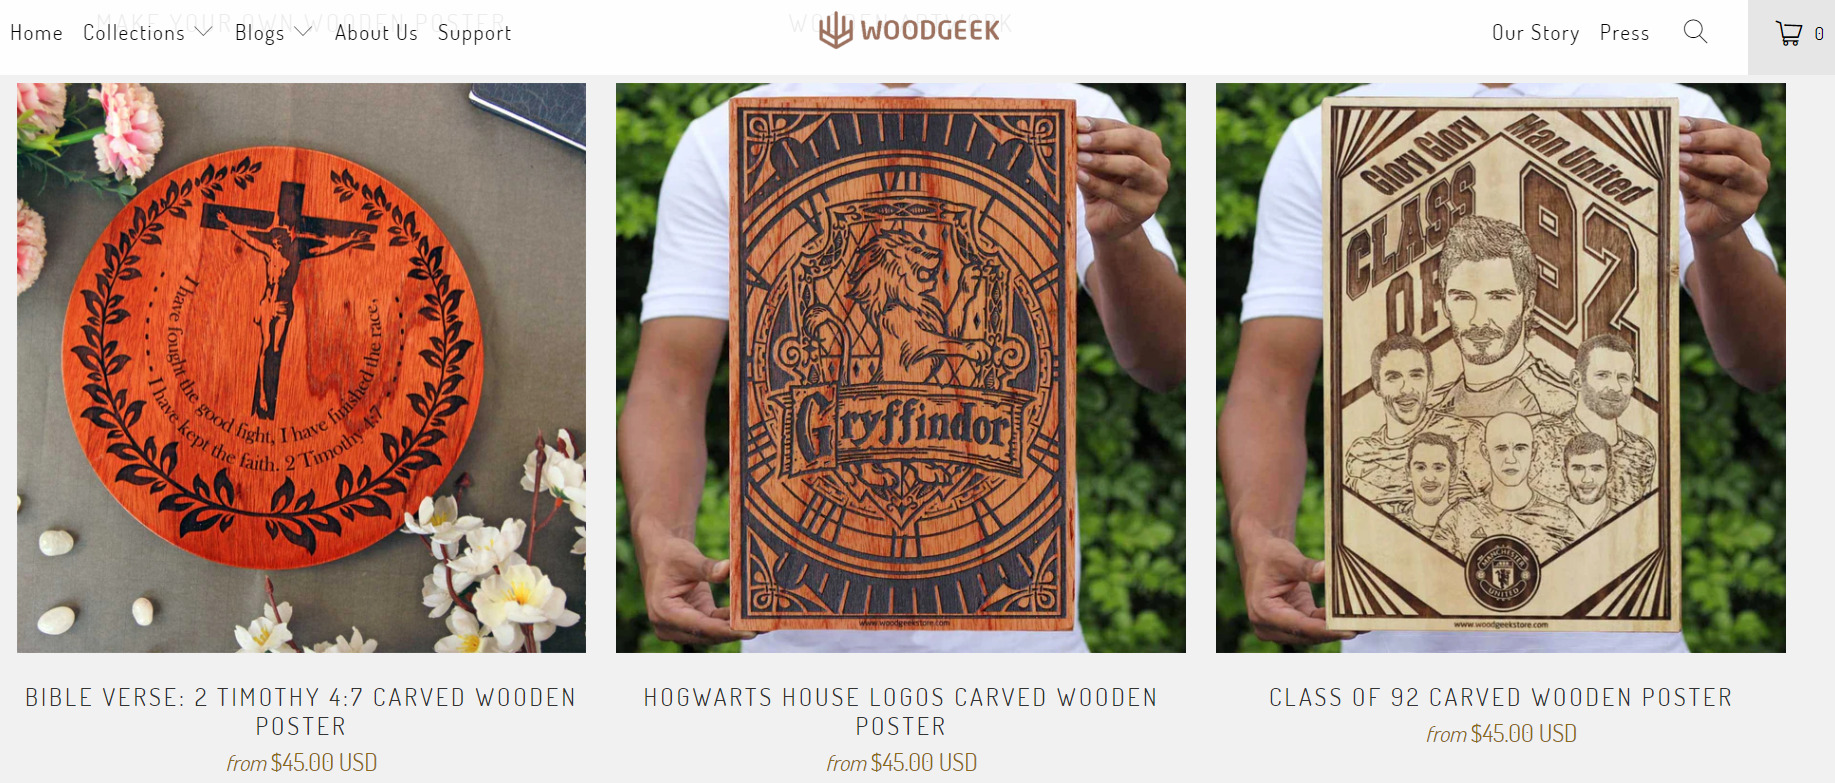 Woodgeek e-commerce website